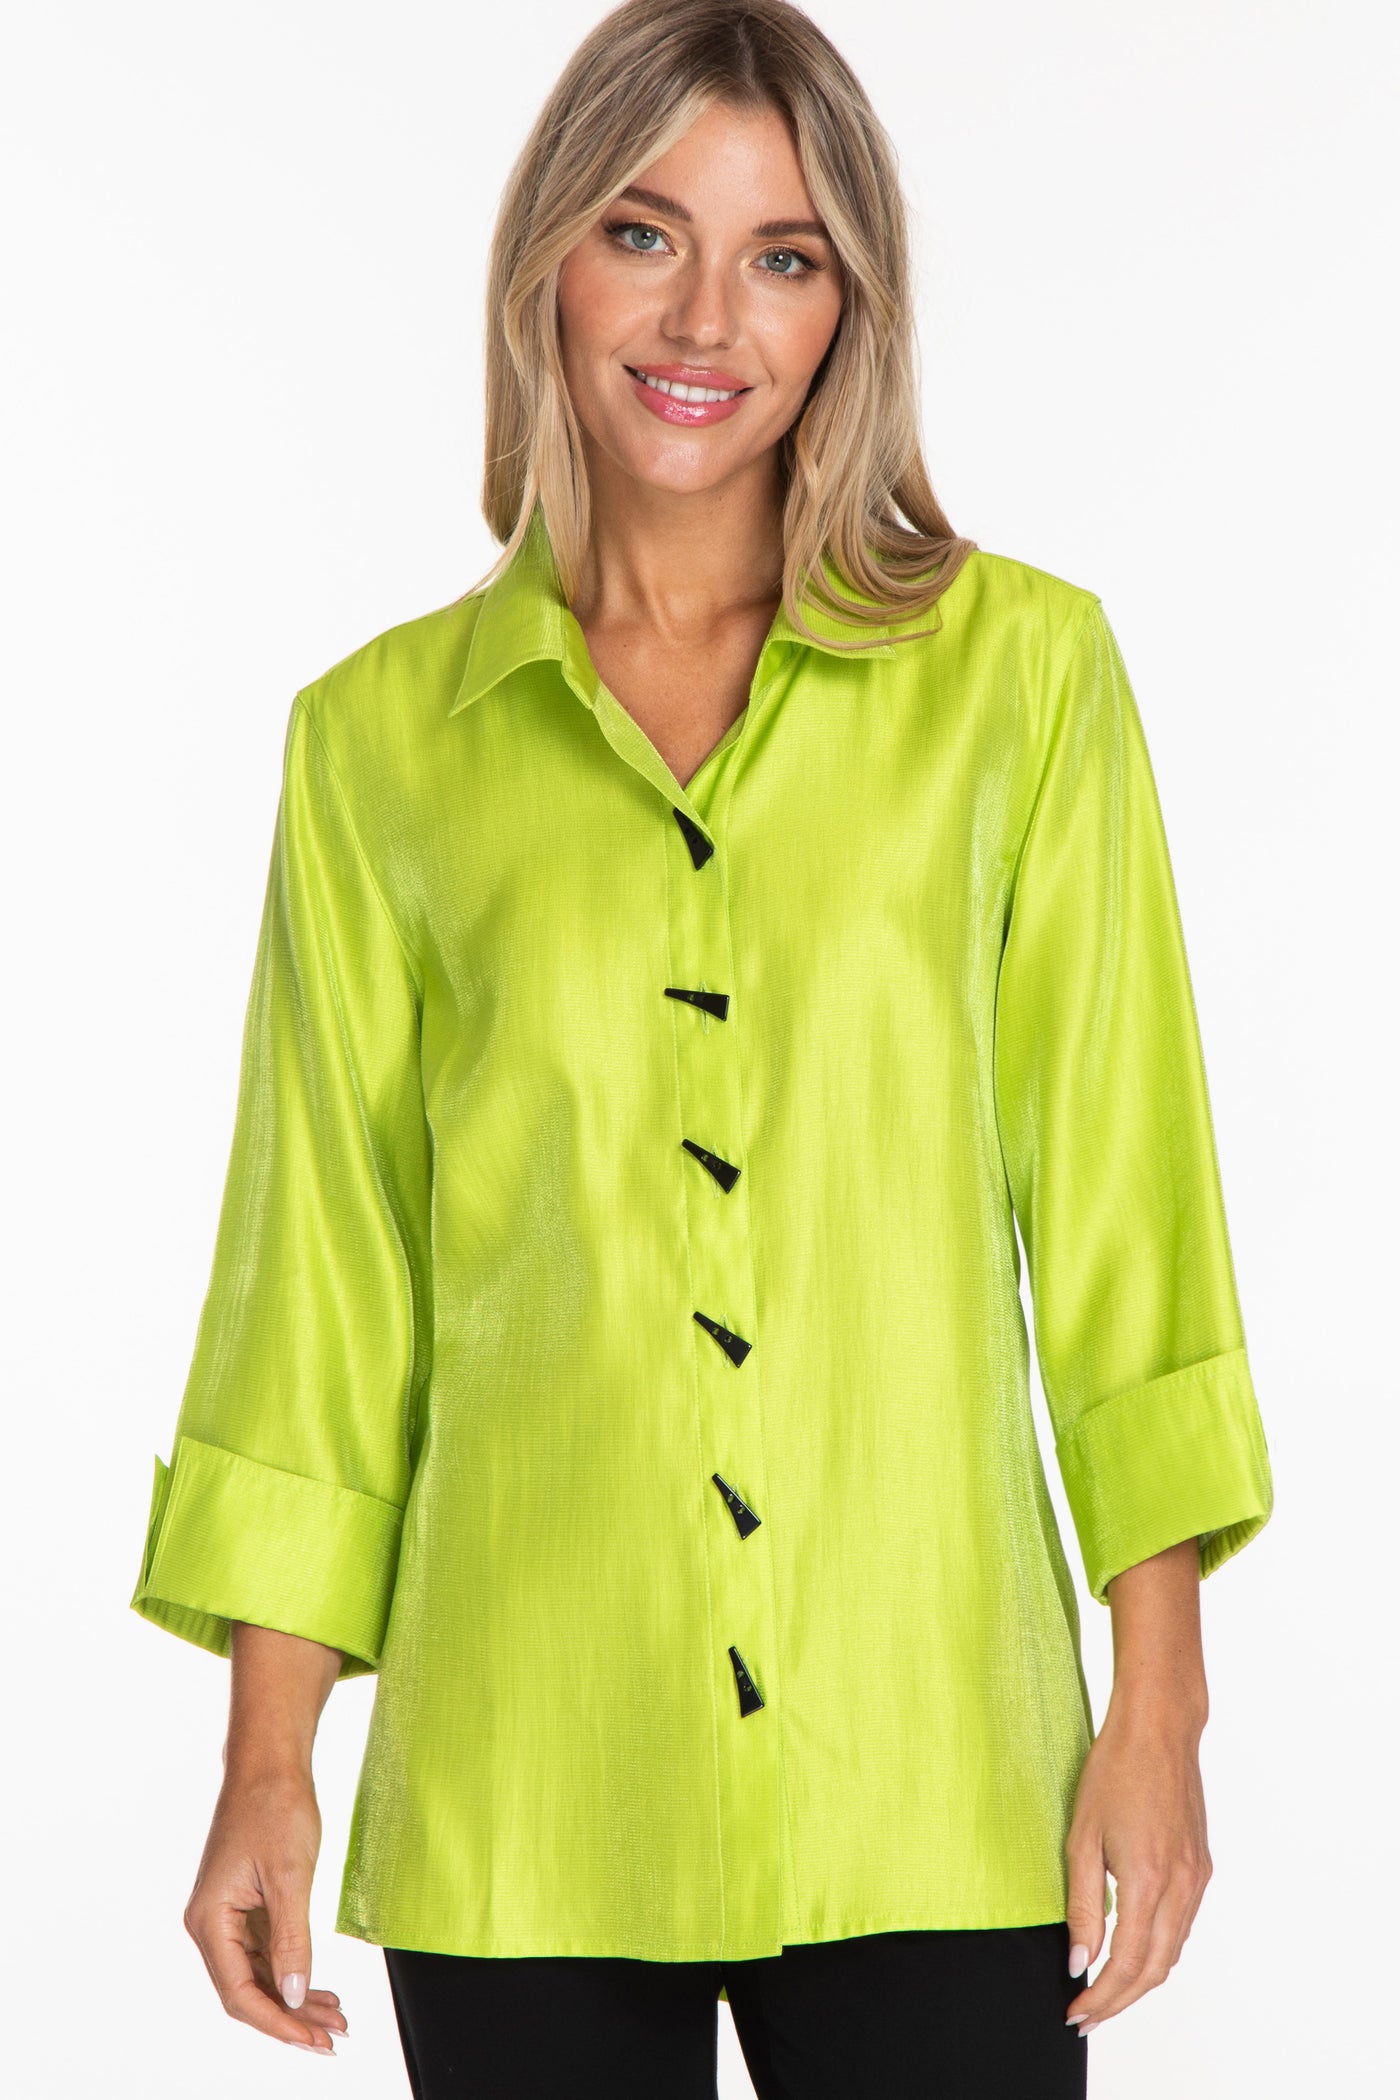 Shimmer Shirt - Key Lime